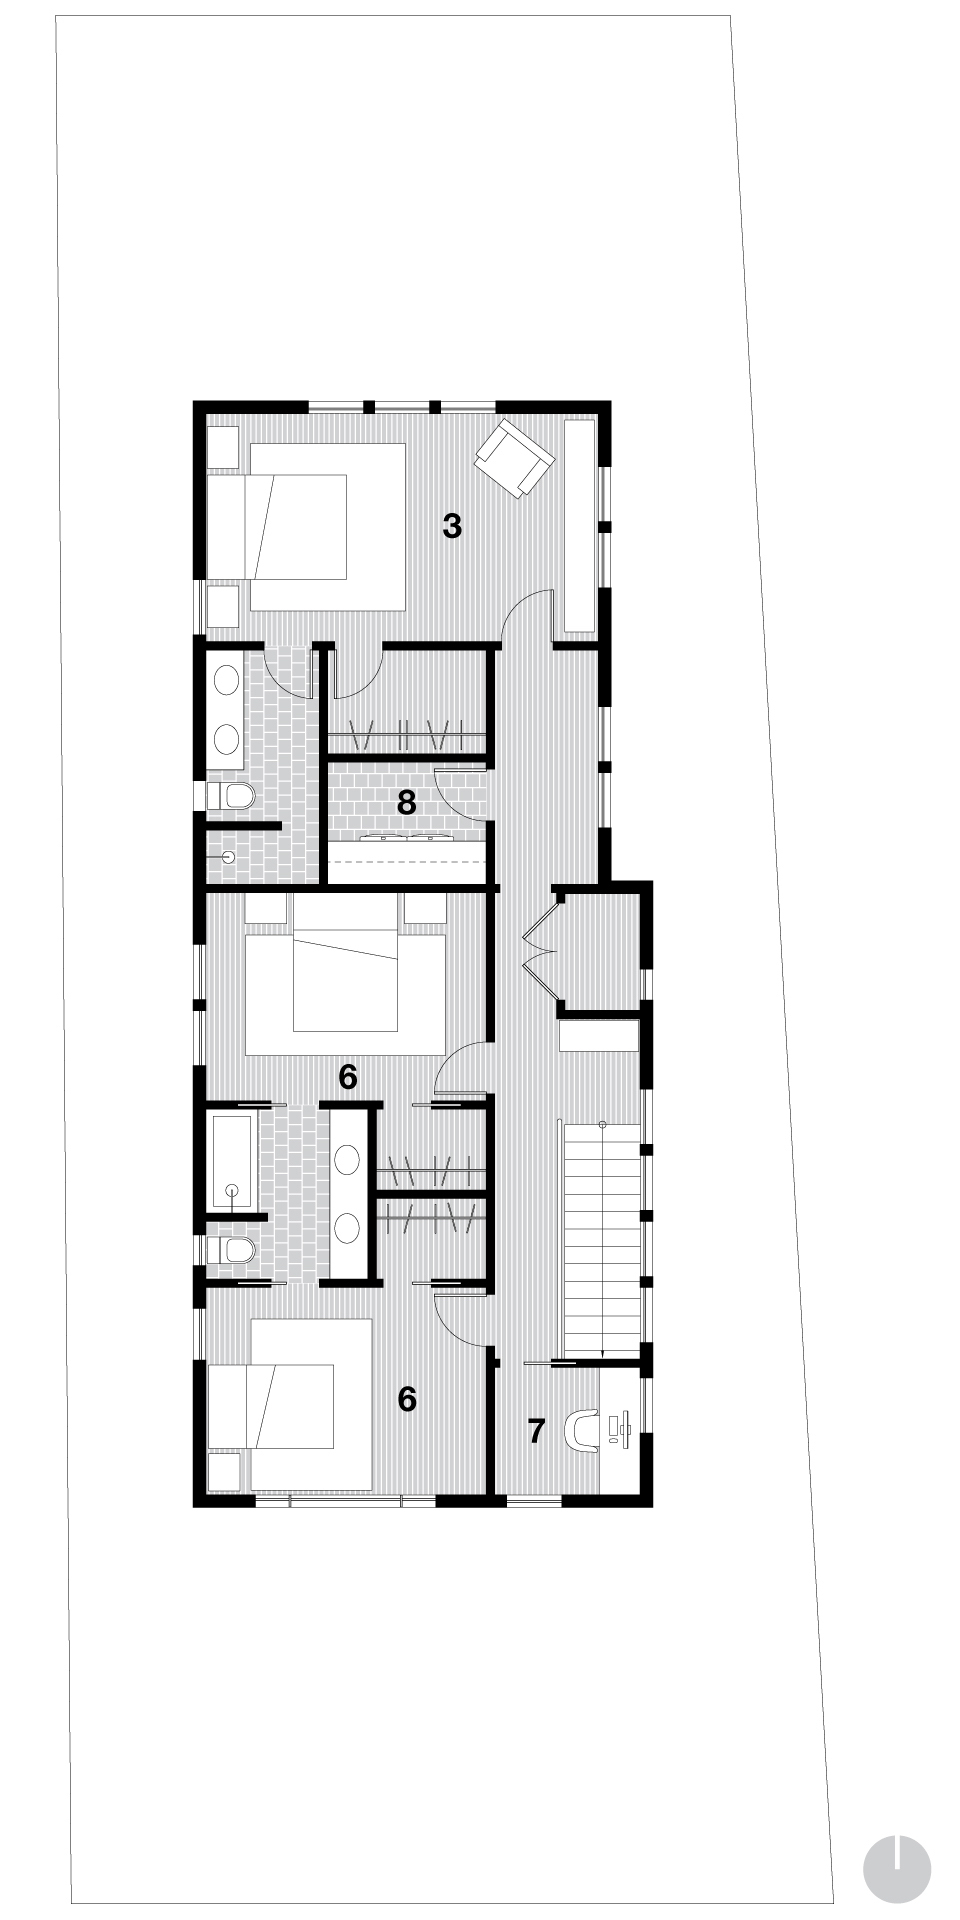 Upper level plan drawing.